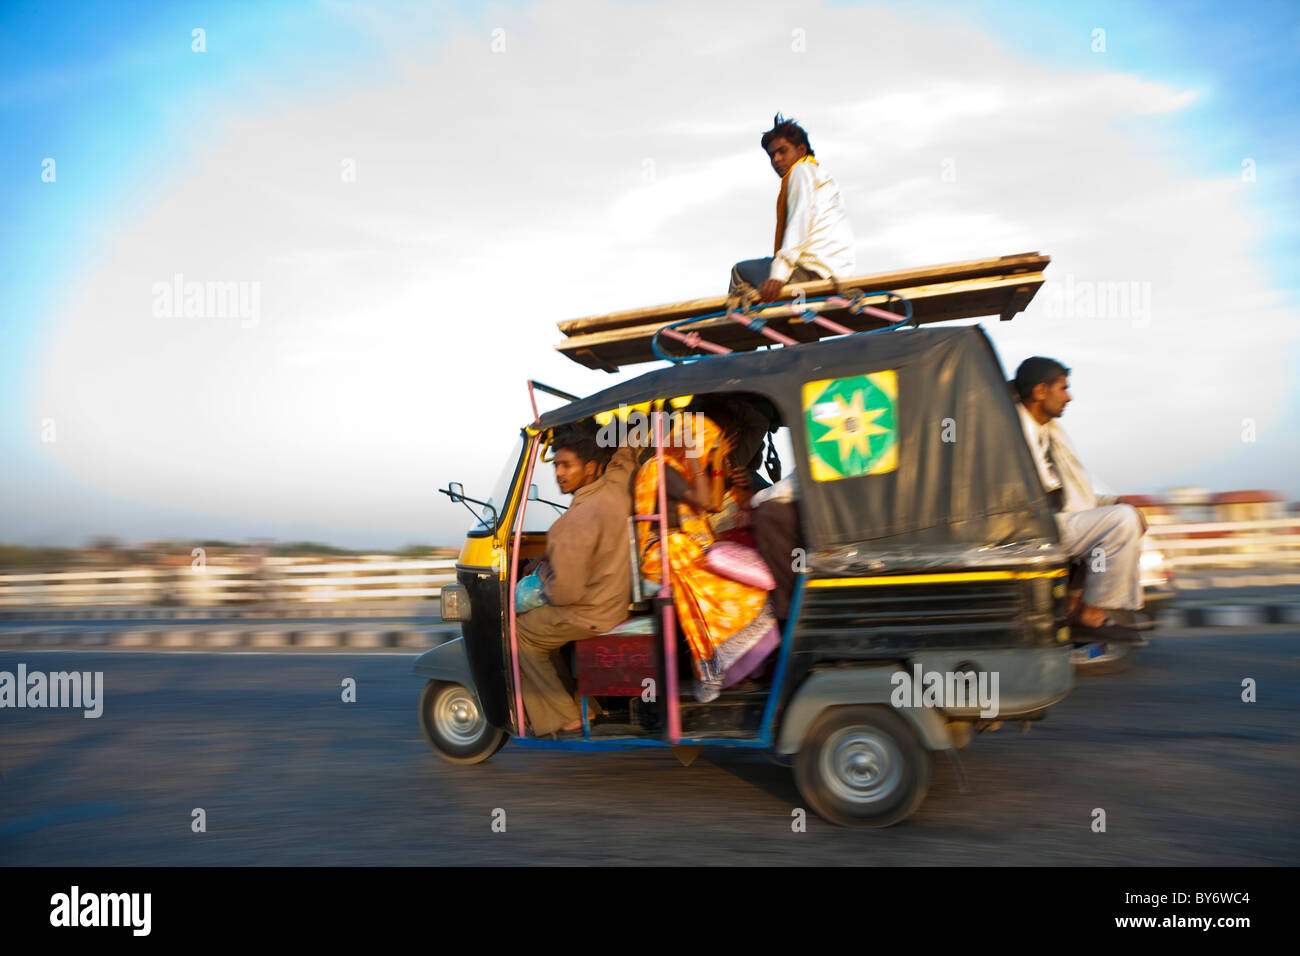 Auto-rickshaw, Uttar Pradesh, India Stock Photo